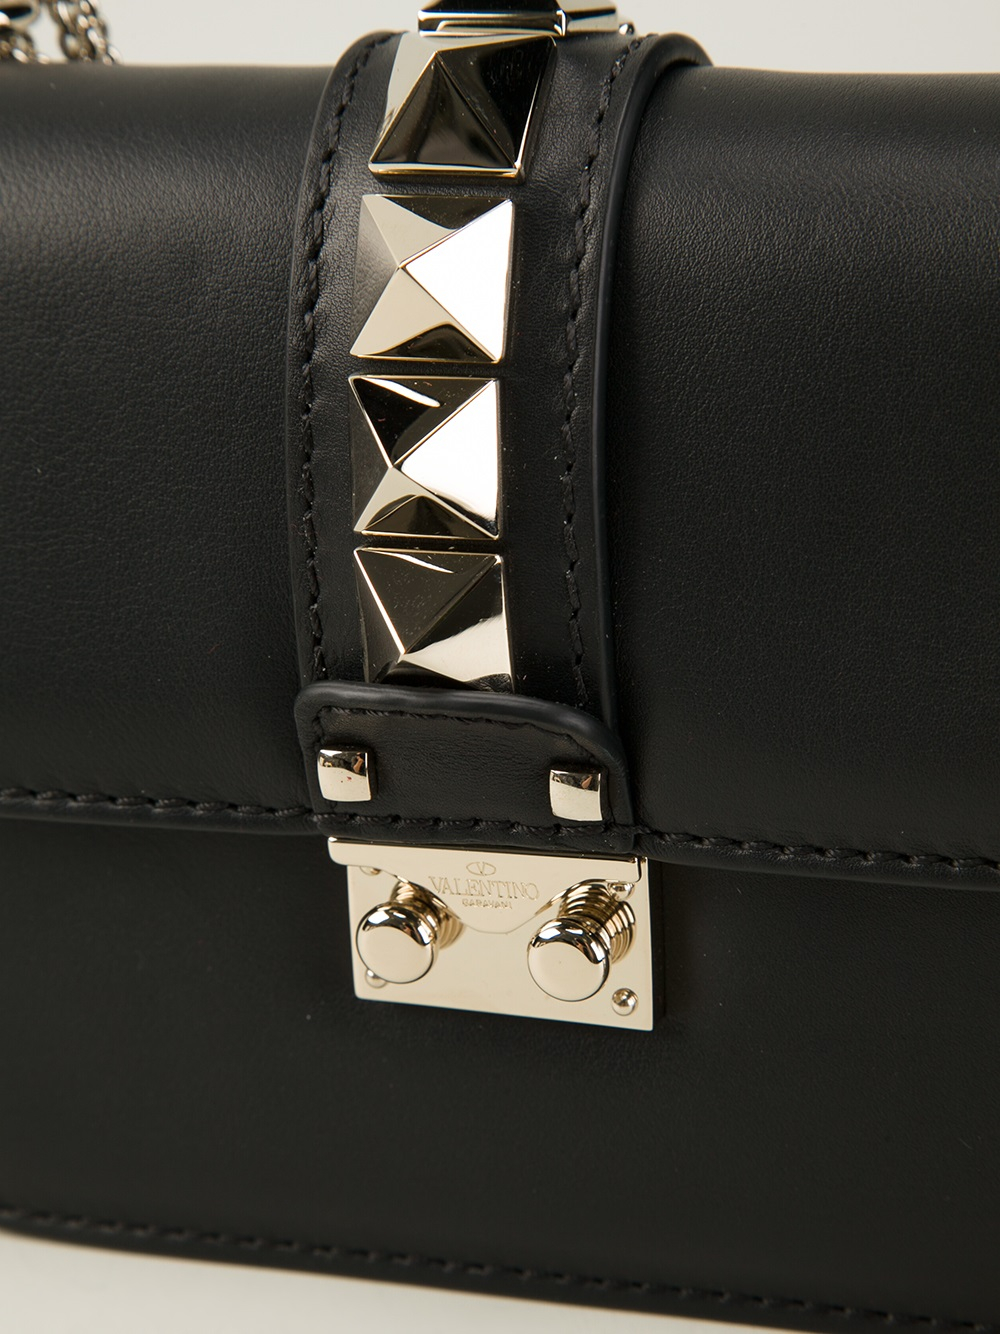 Lyst - Valentino Rockstud Mini Shoulder Bag in Black